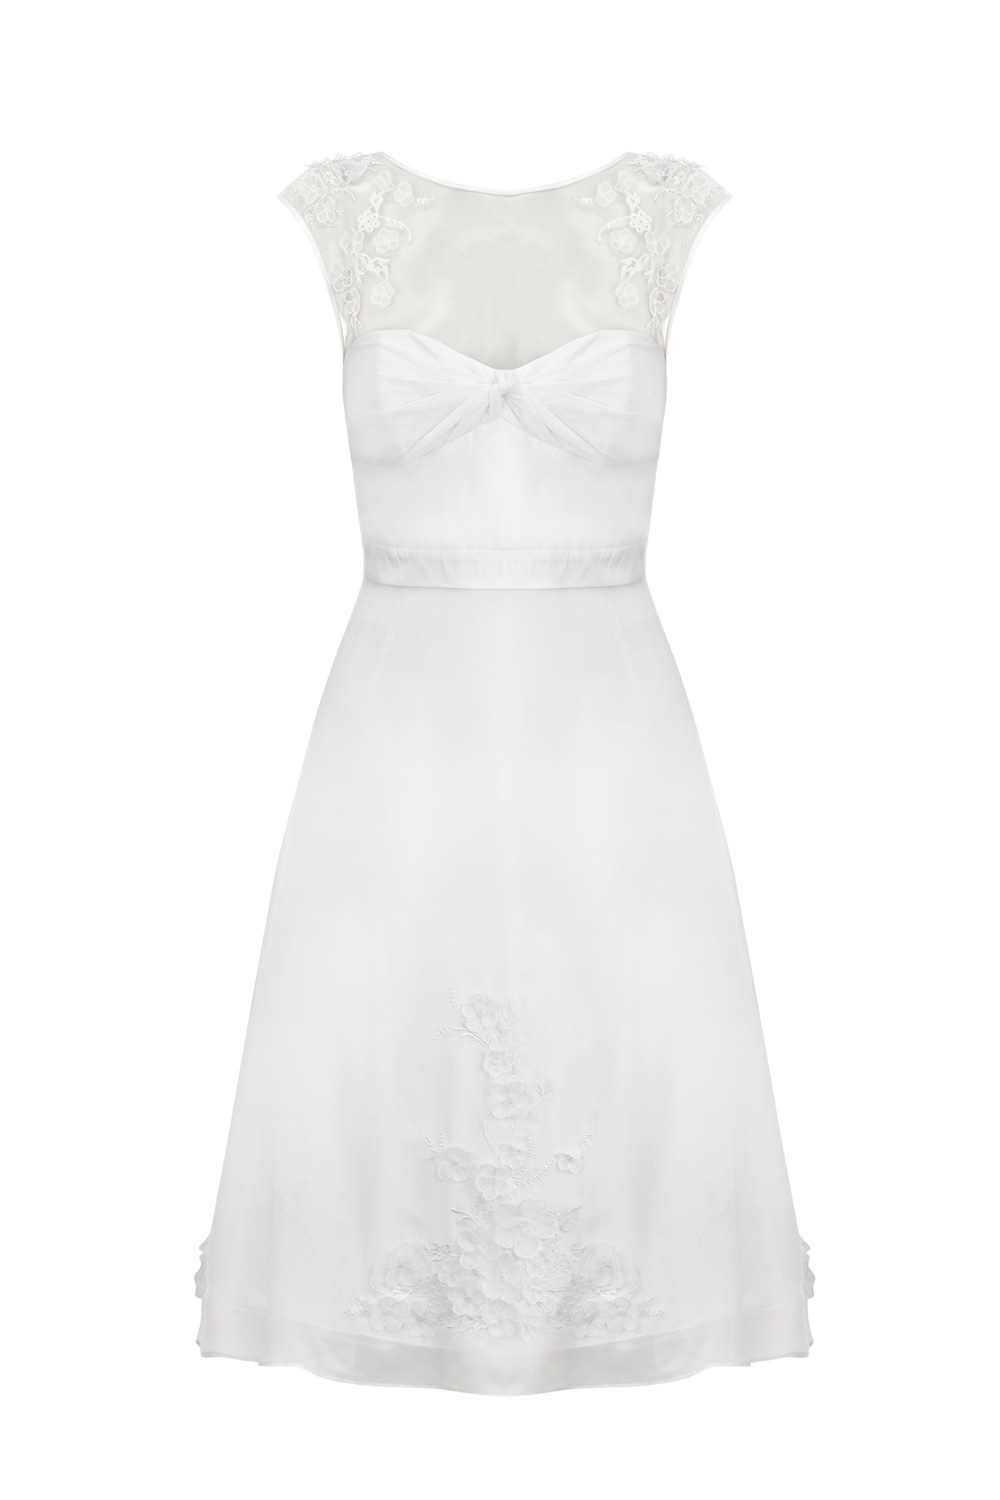 Lyst - Coast Monroe Dress in White